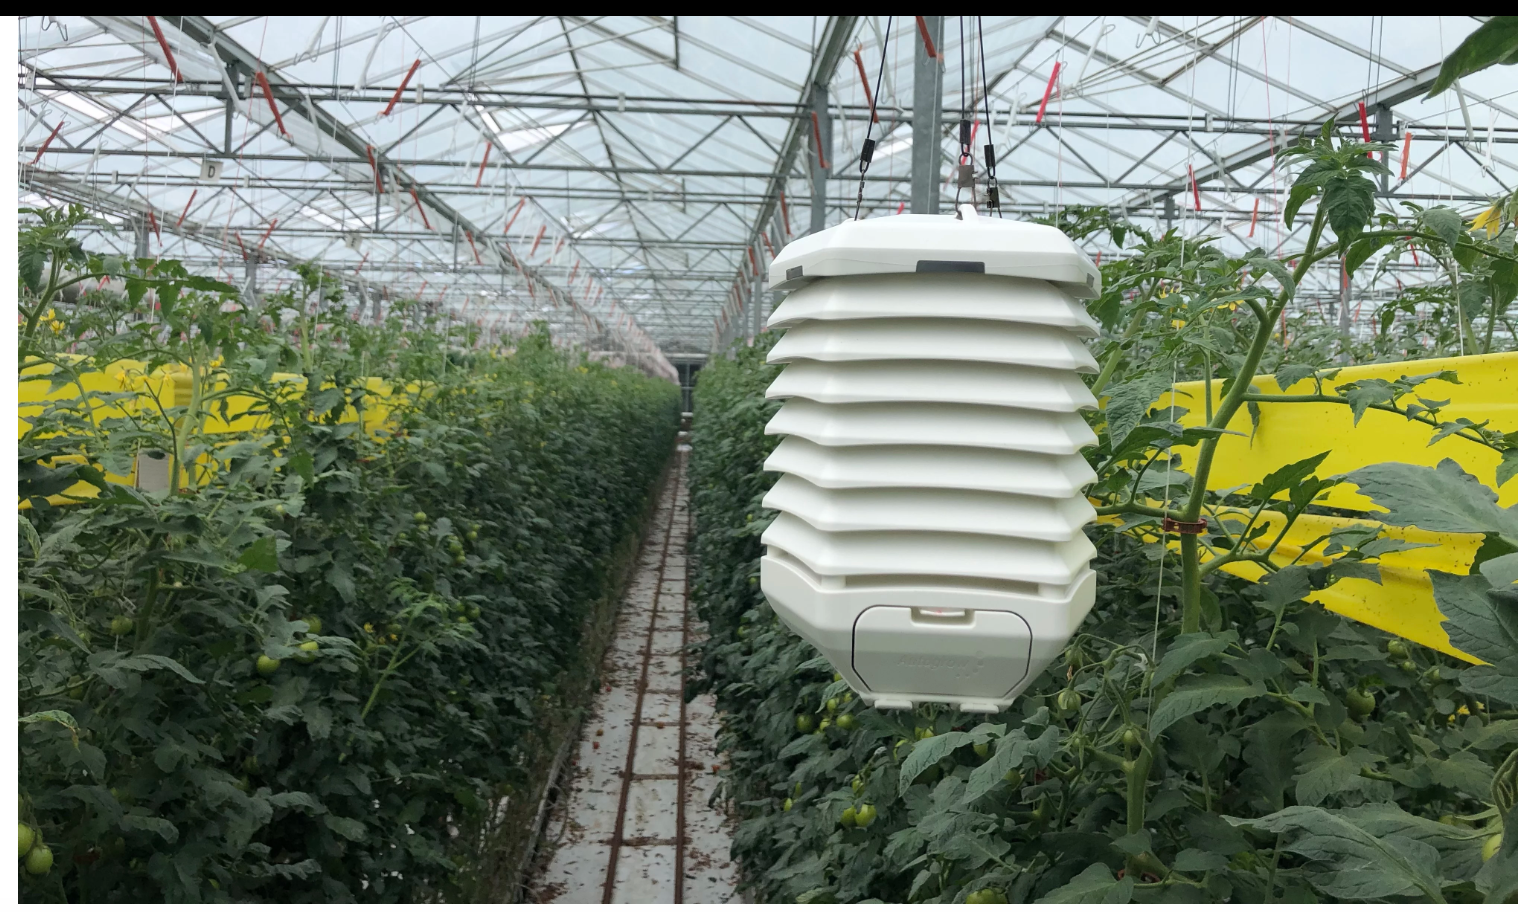 Autogrow develops wireless sensor for greenhouses